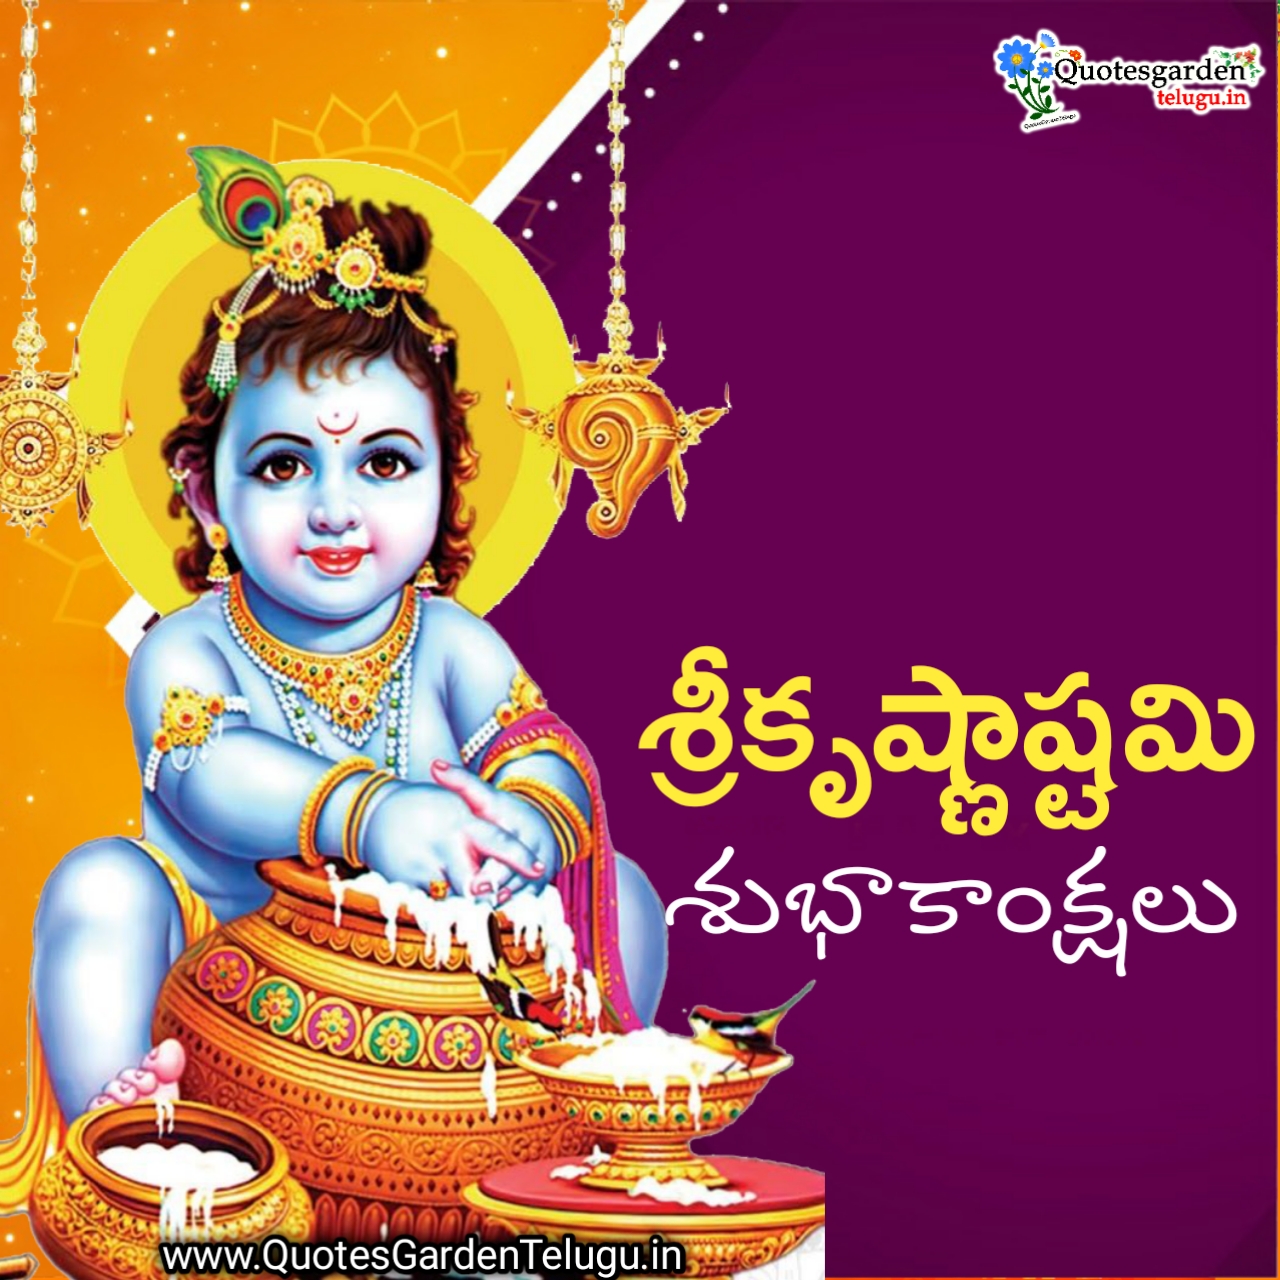 Happy Krishnashtami wishes images 2021in telugu greetings messages ...